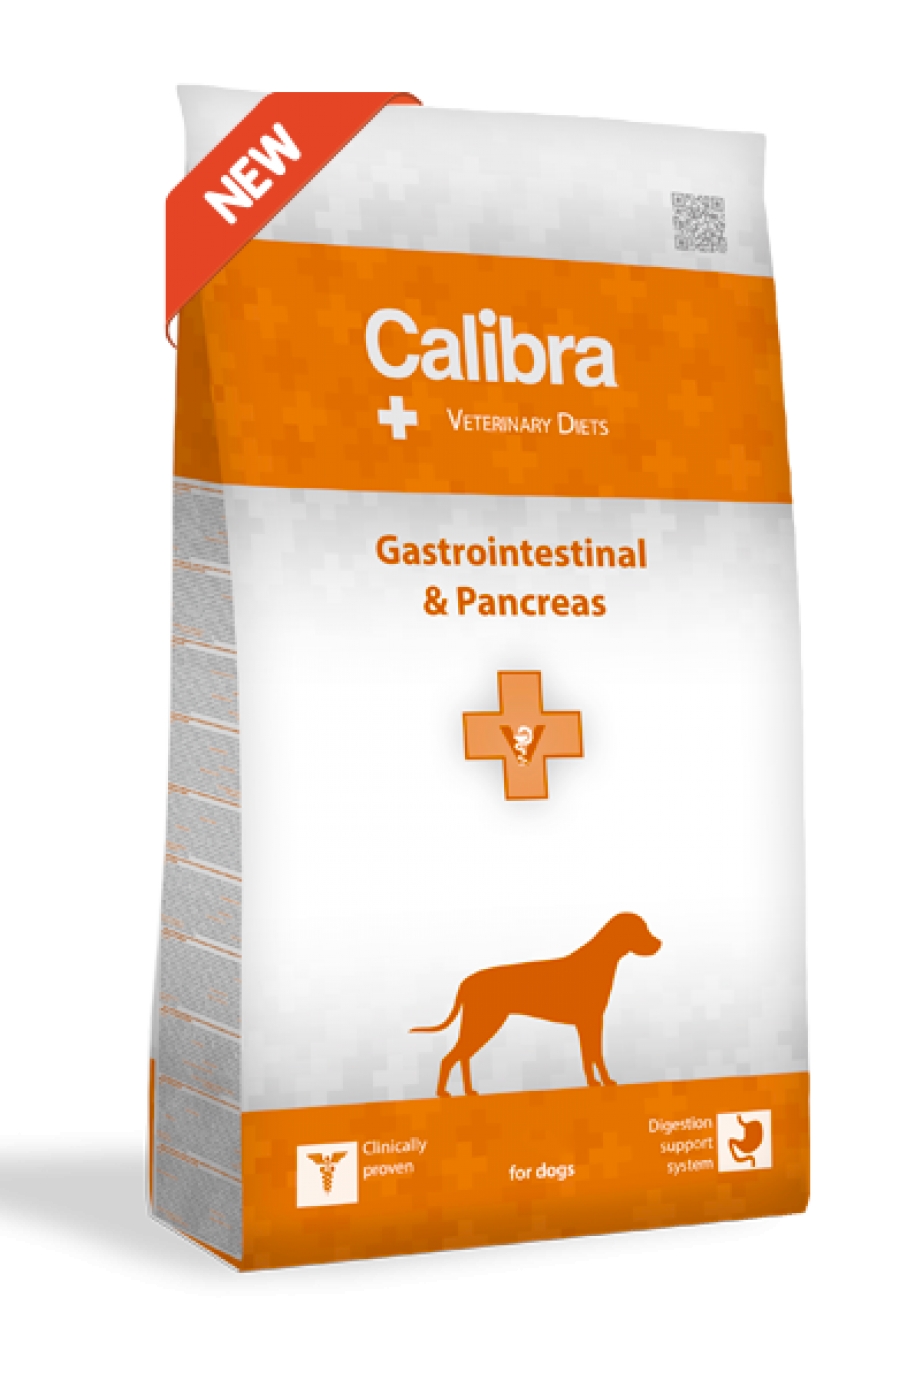 calibra veterinary diets gastrointestinal